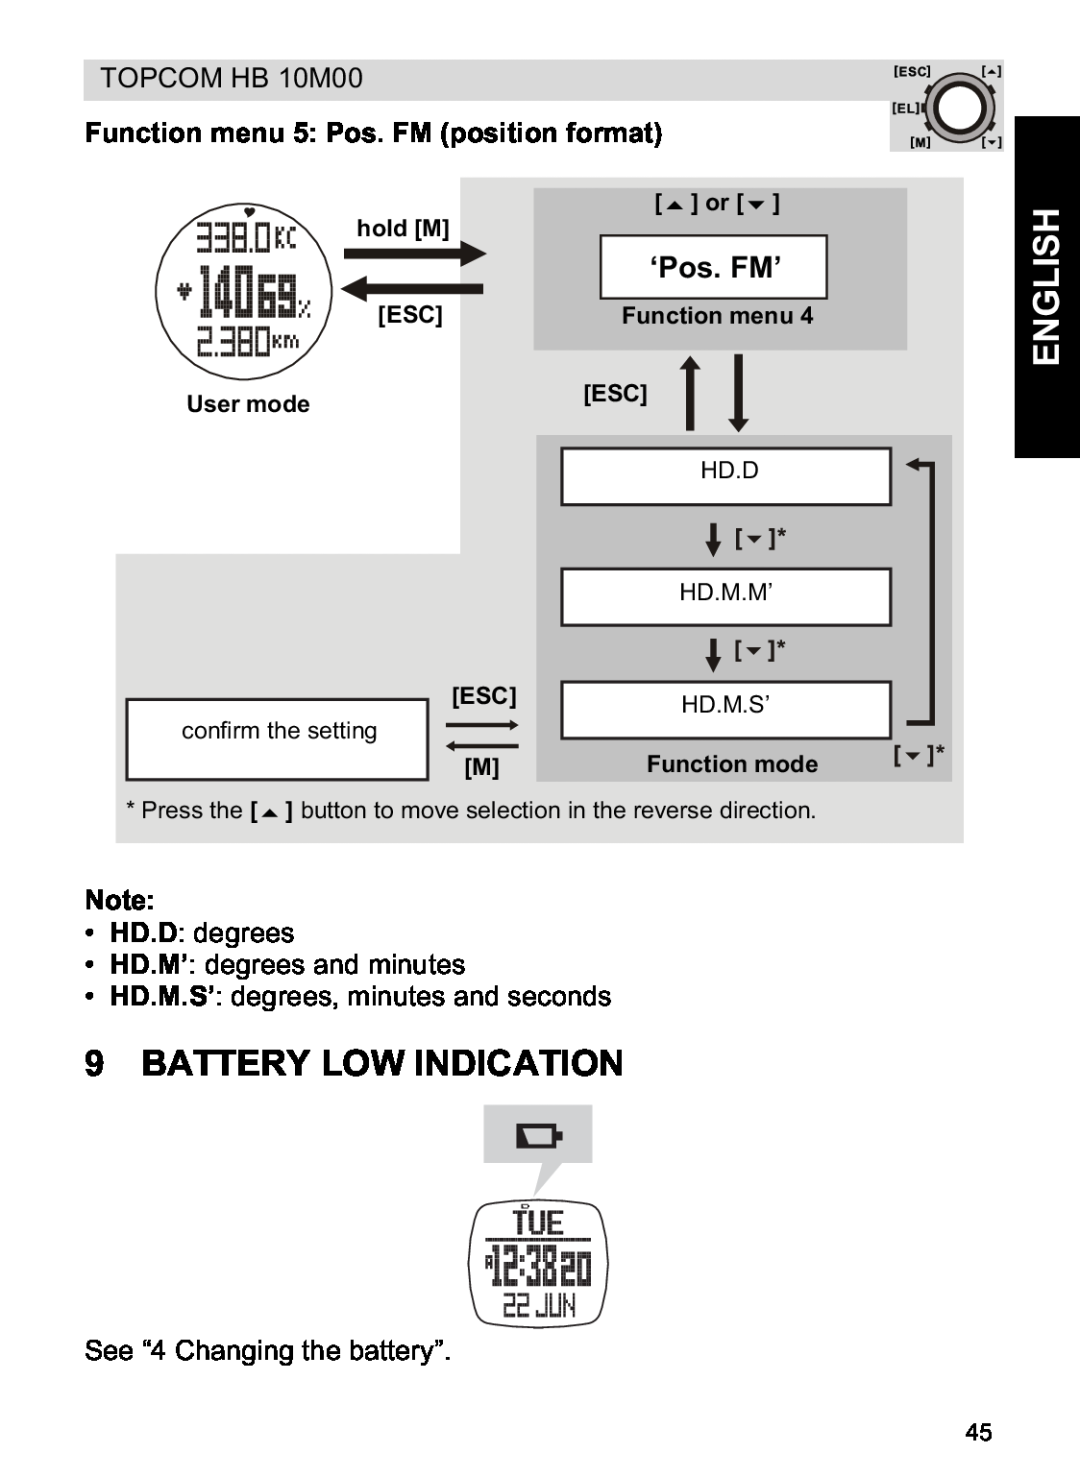 Topcom HB 10M00 manual Battery Low Indication, ‘Pos. FM’, Function menu 5 Pos. FM position format, English 